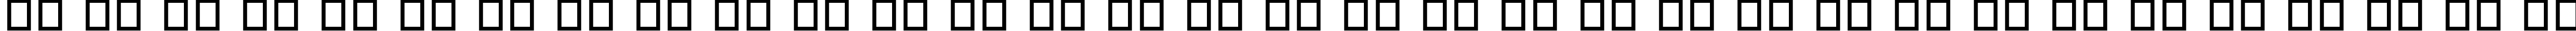 Пример написания русского алфавита шрифтом Cycling